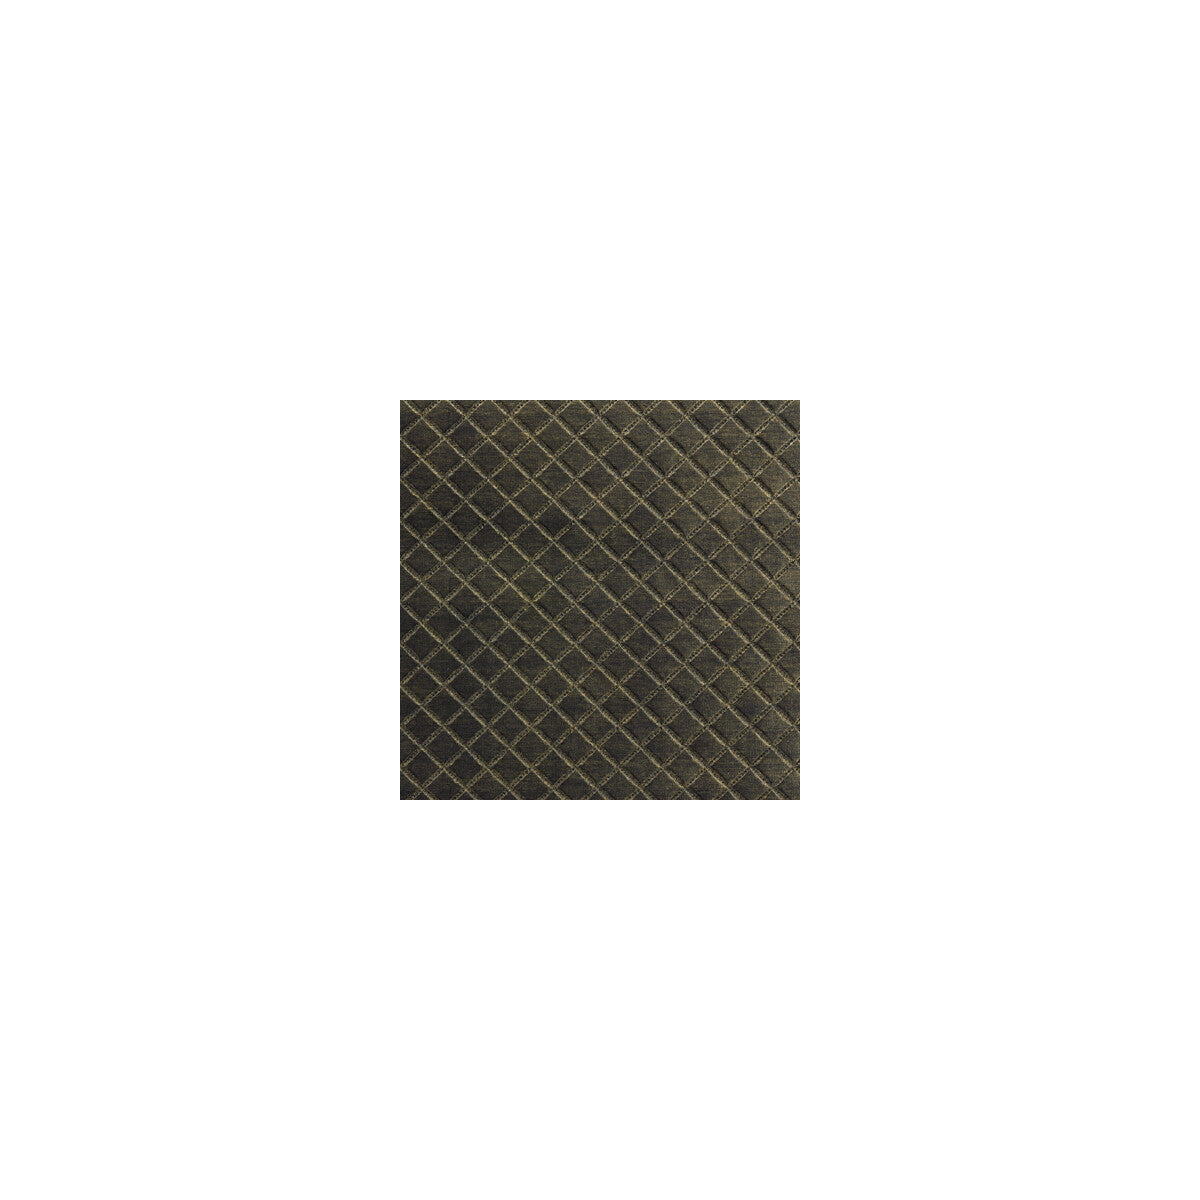 Cornered fabric in tea leaf color - pattern CORNERED.21.0 - by Kravet Couture